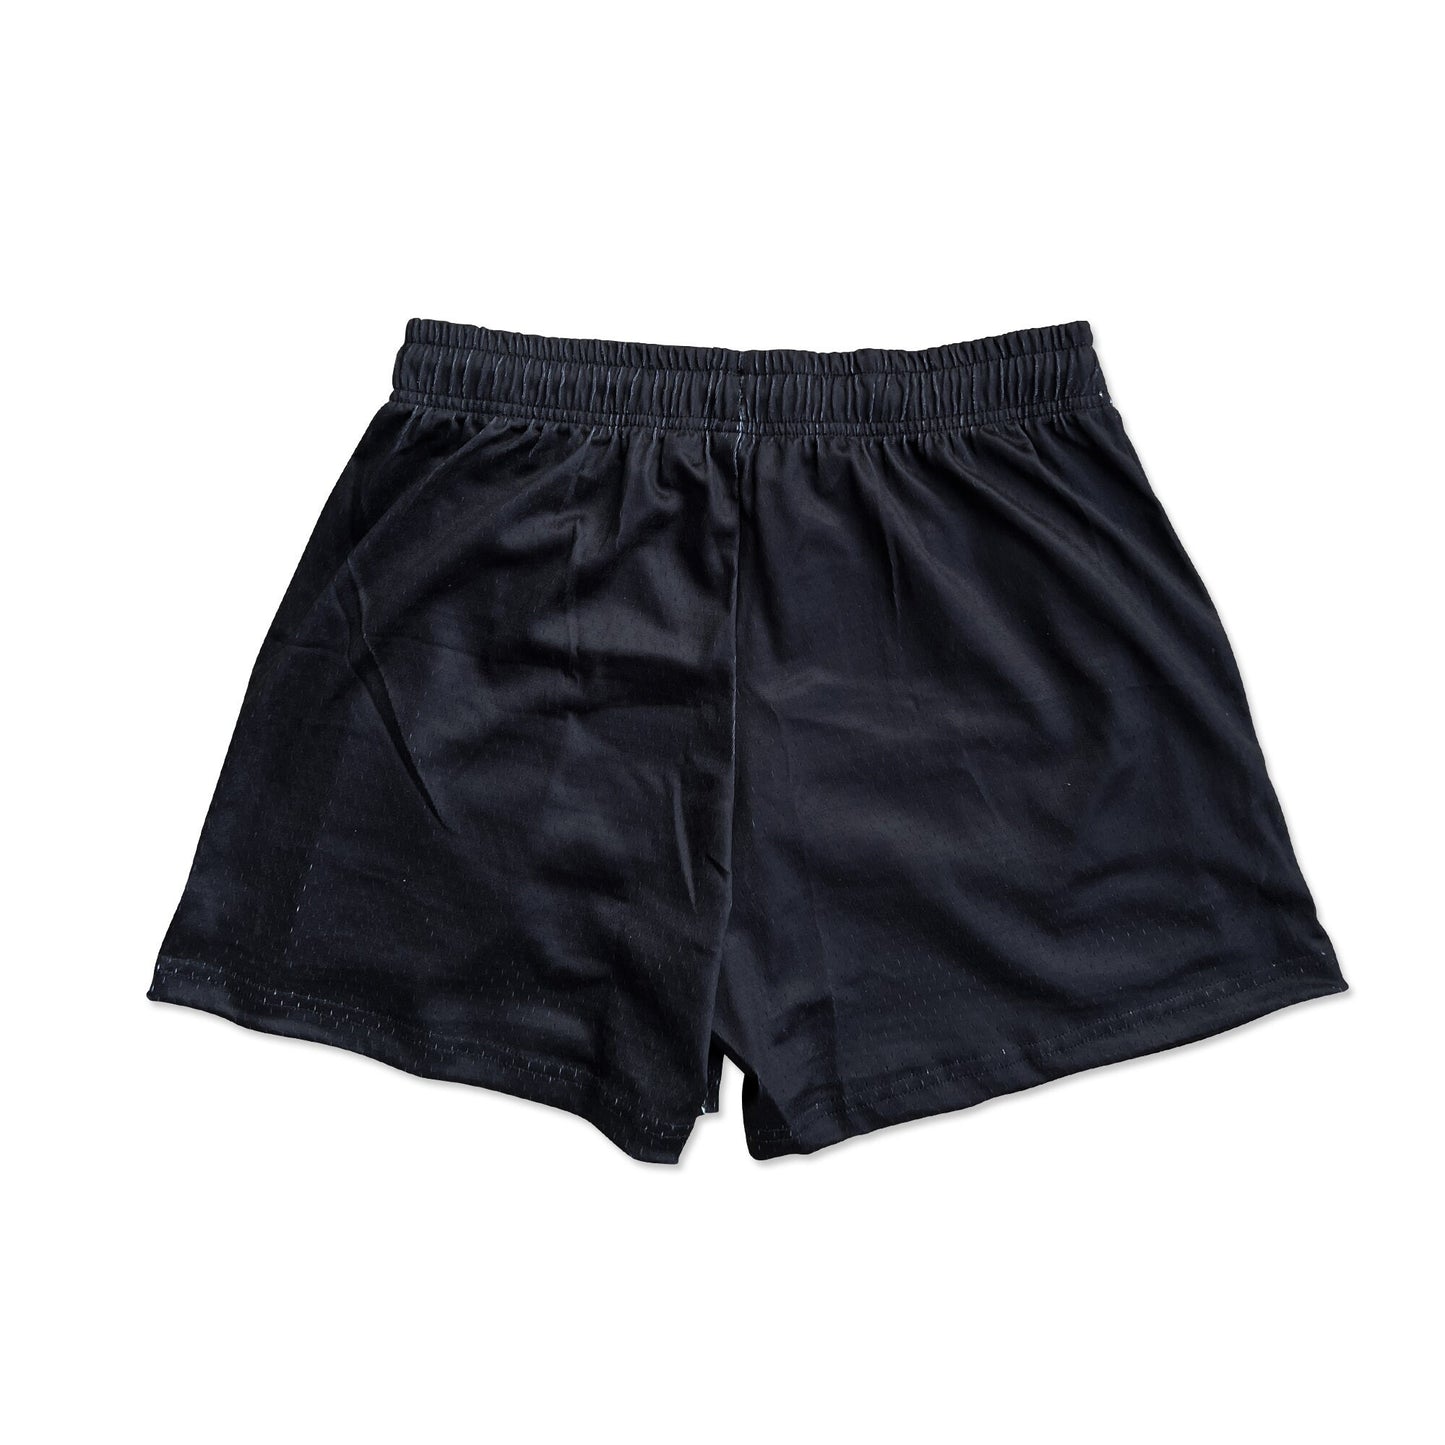 Black - Premium Mesh JJ Shorts - 5 Inch Inseam (Preorder) – JJshorts